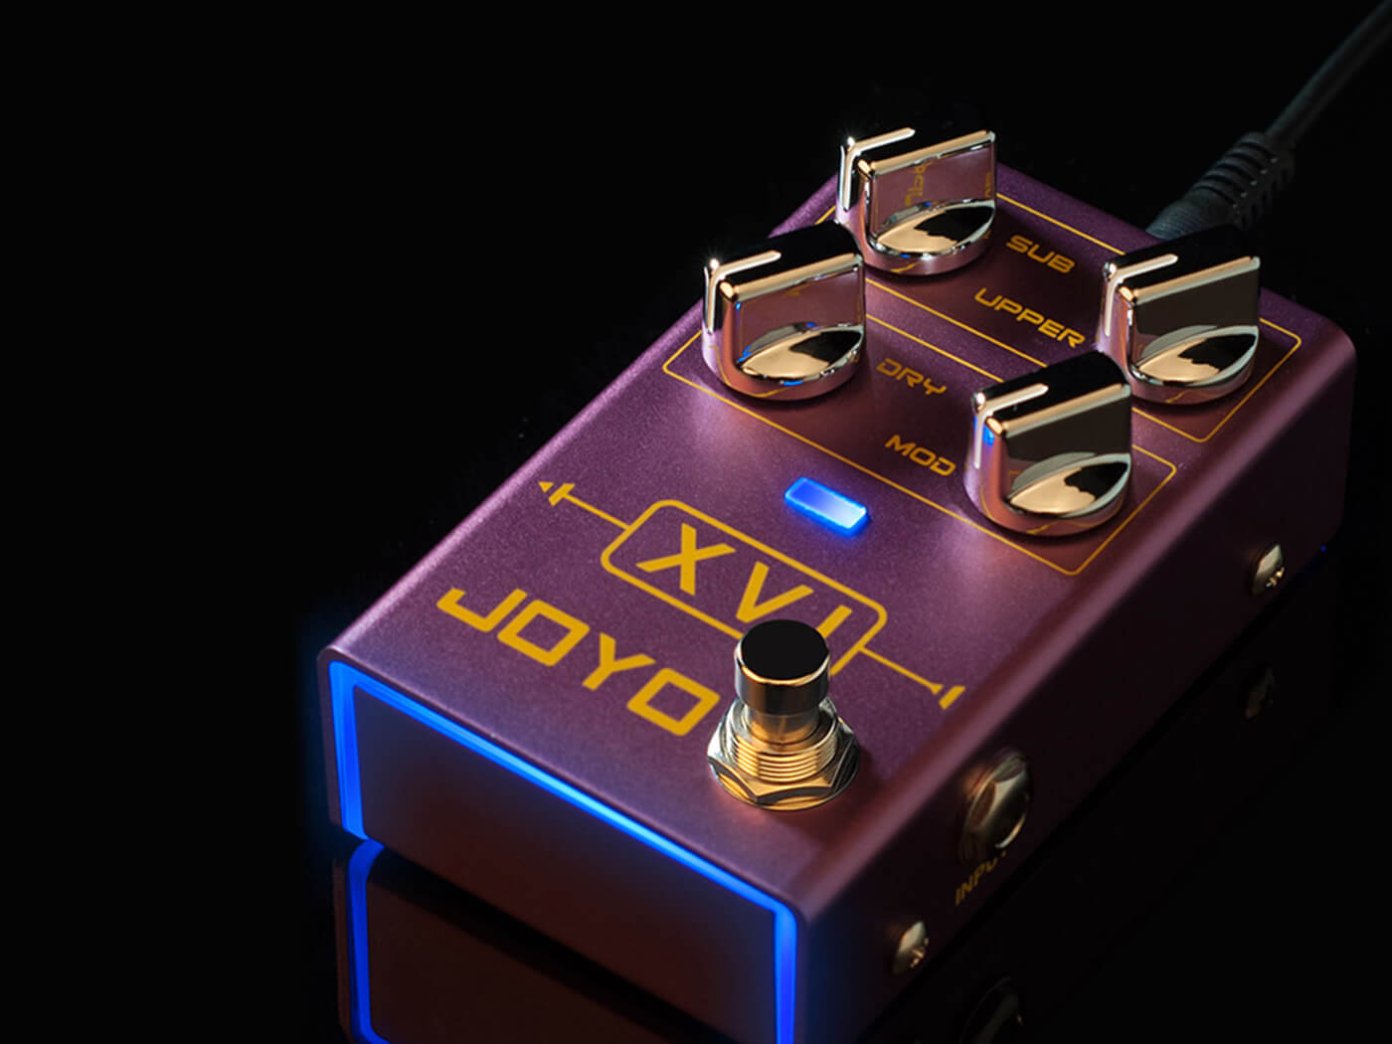 Joyo unveils the R-13 XVI octave pedal